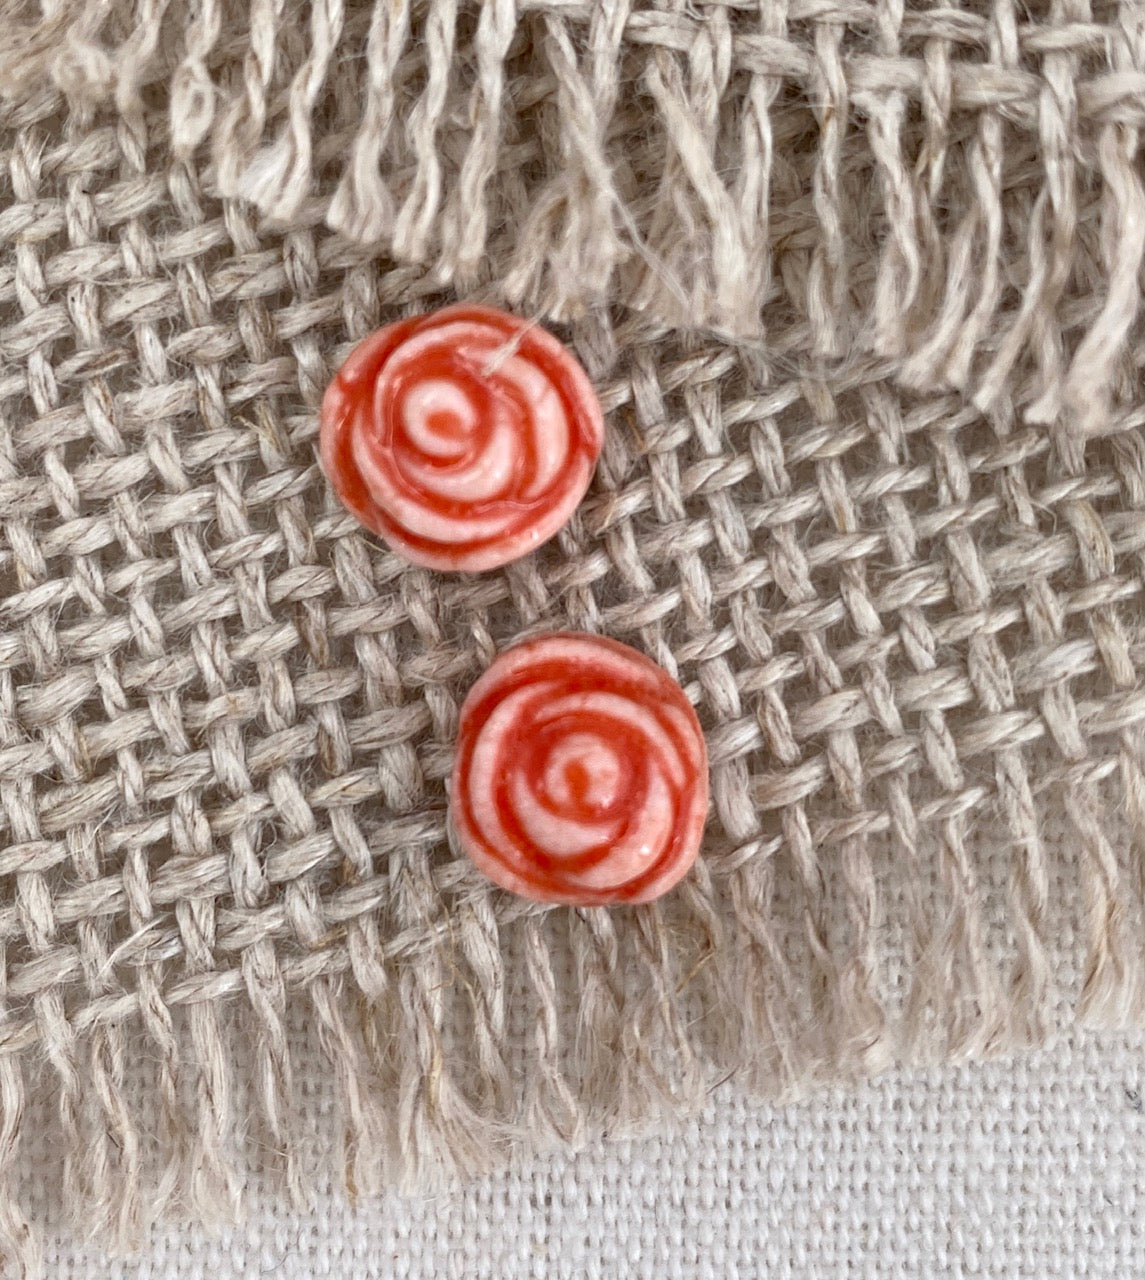 Rose Earring - small, delicate, porcelain